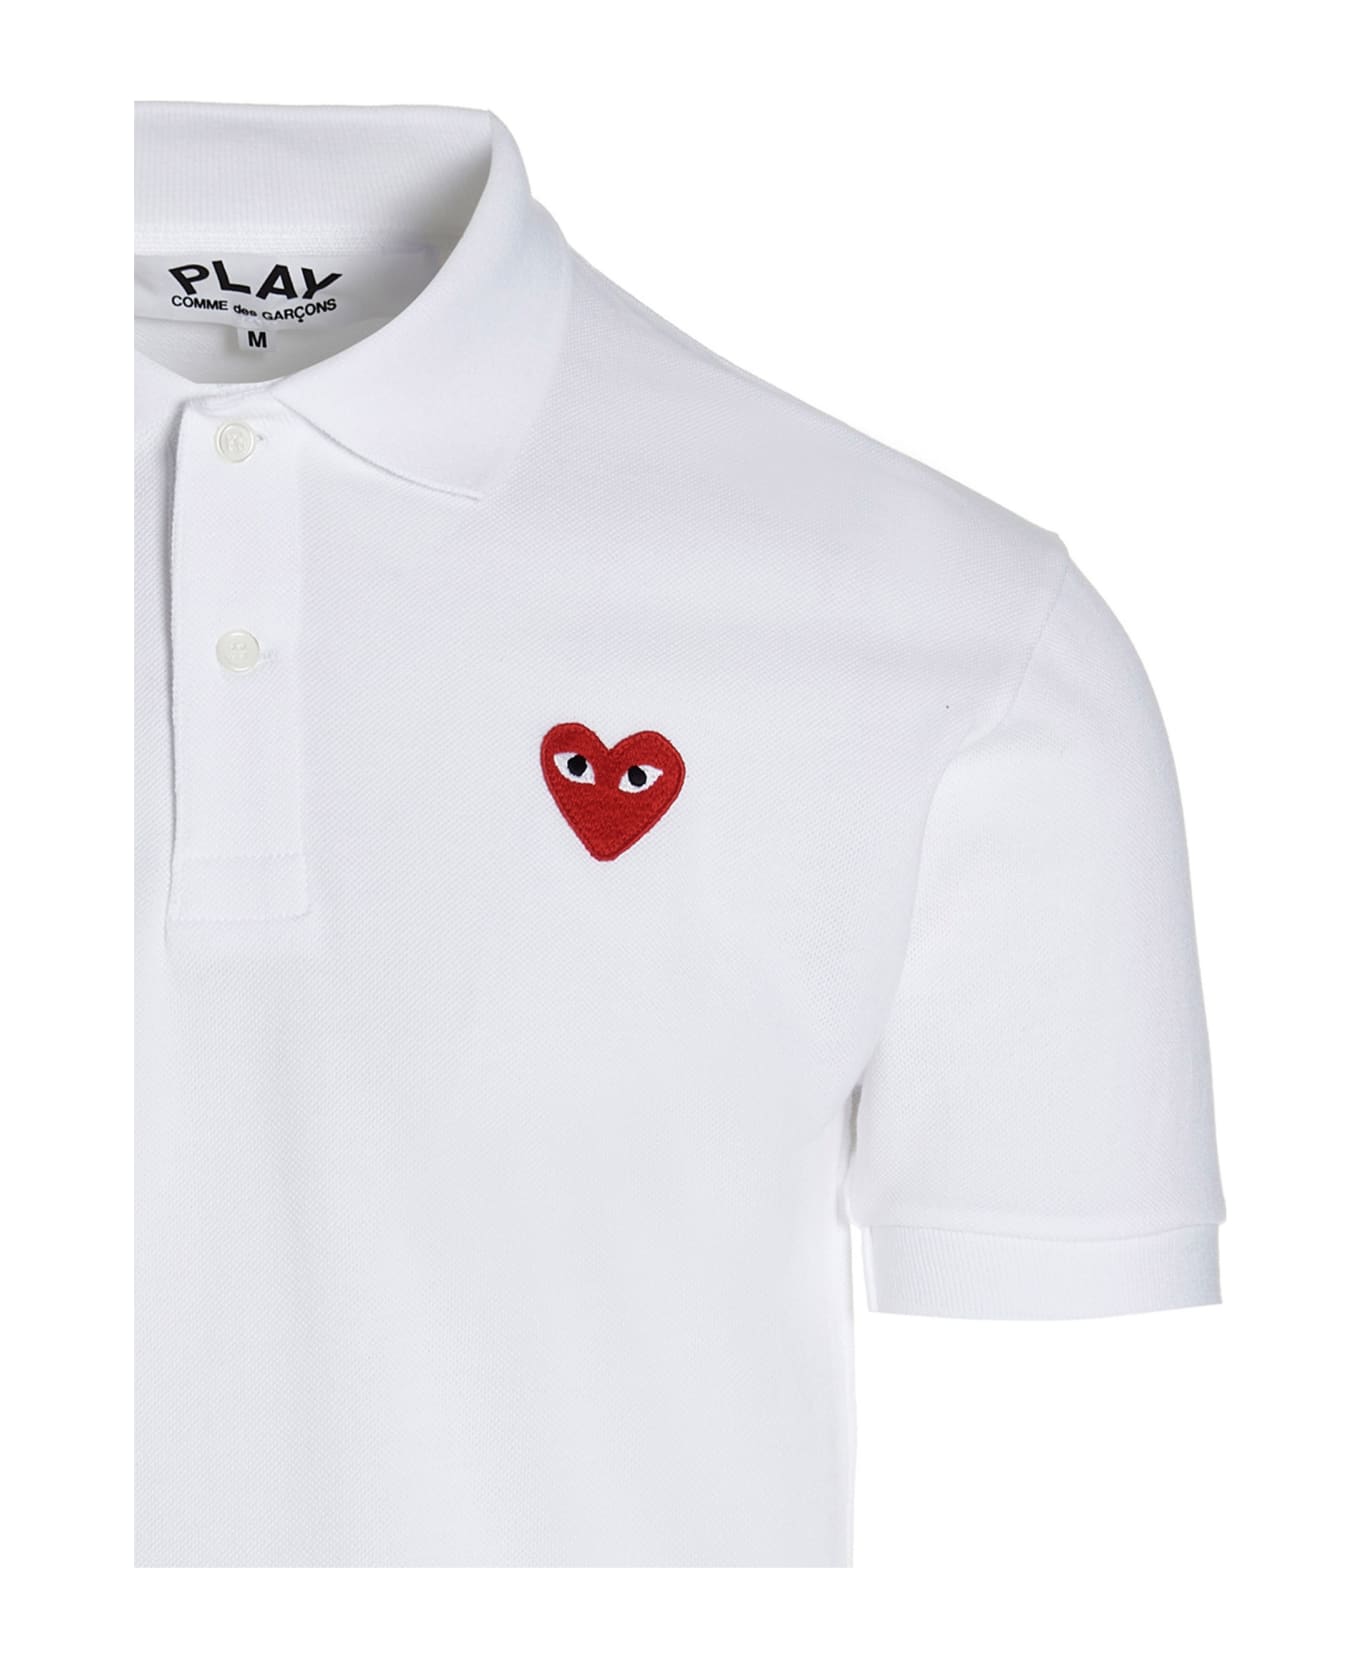 Comme des Garçons Play Logo Patch Polo Shirt - White